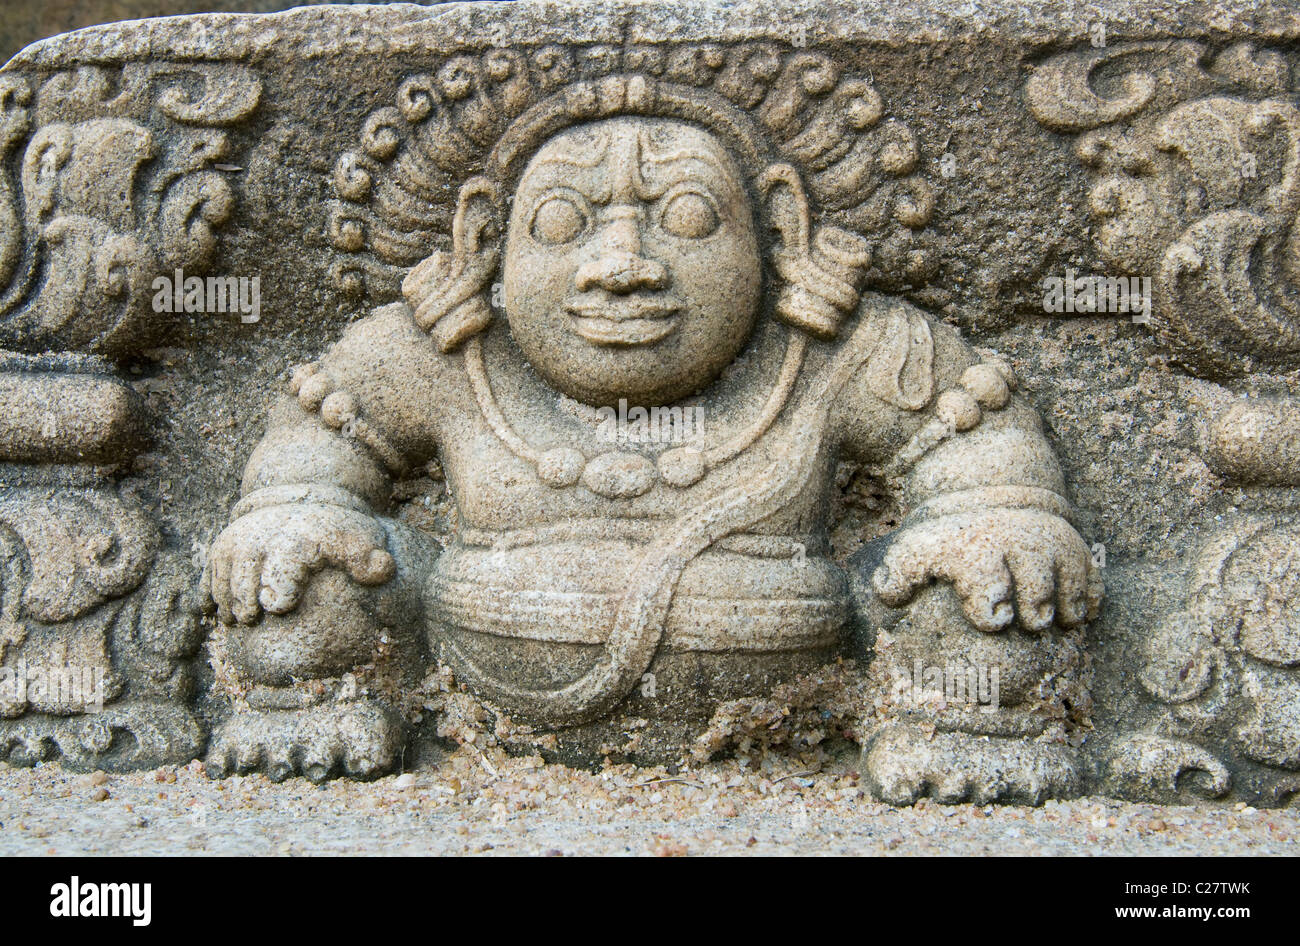 Dwarf figure, Ratnaprasada or chapter house, Anuradhapura ruins, Sri Lanka Stock Photo